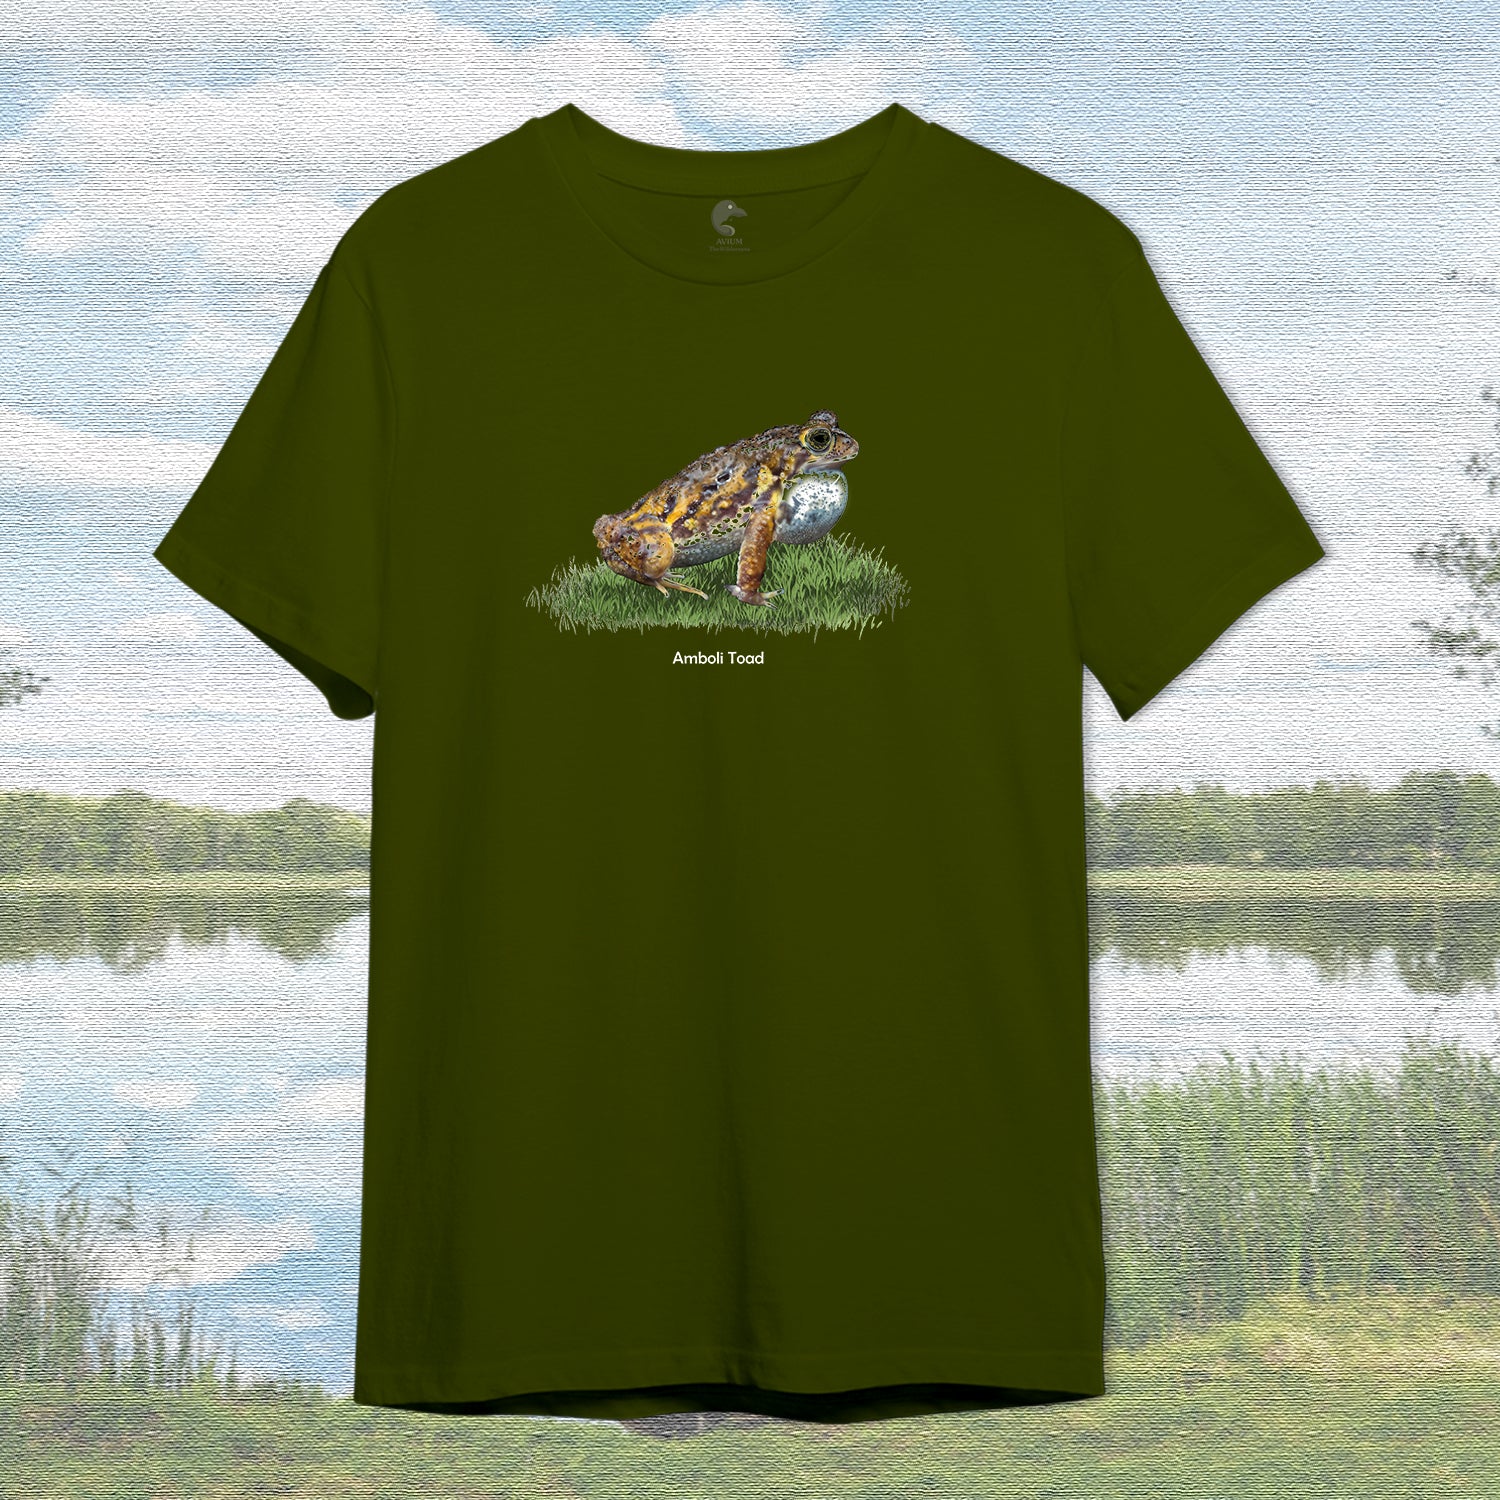 Amboli Toad Graphic Print T-shirt: Embrace Wildlife Fashion with Premium Quality